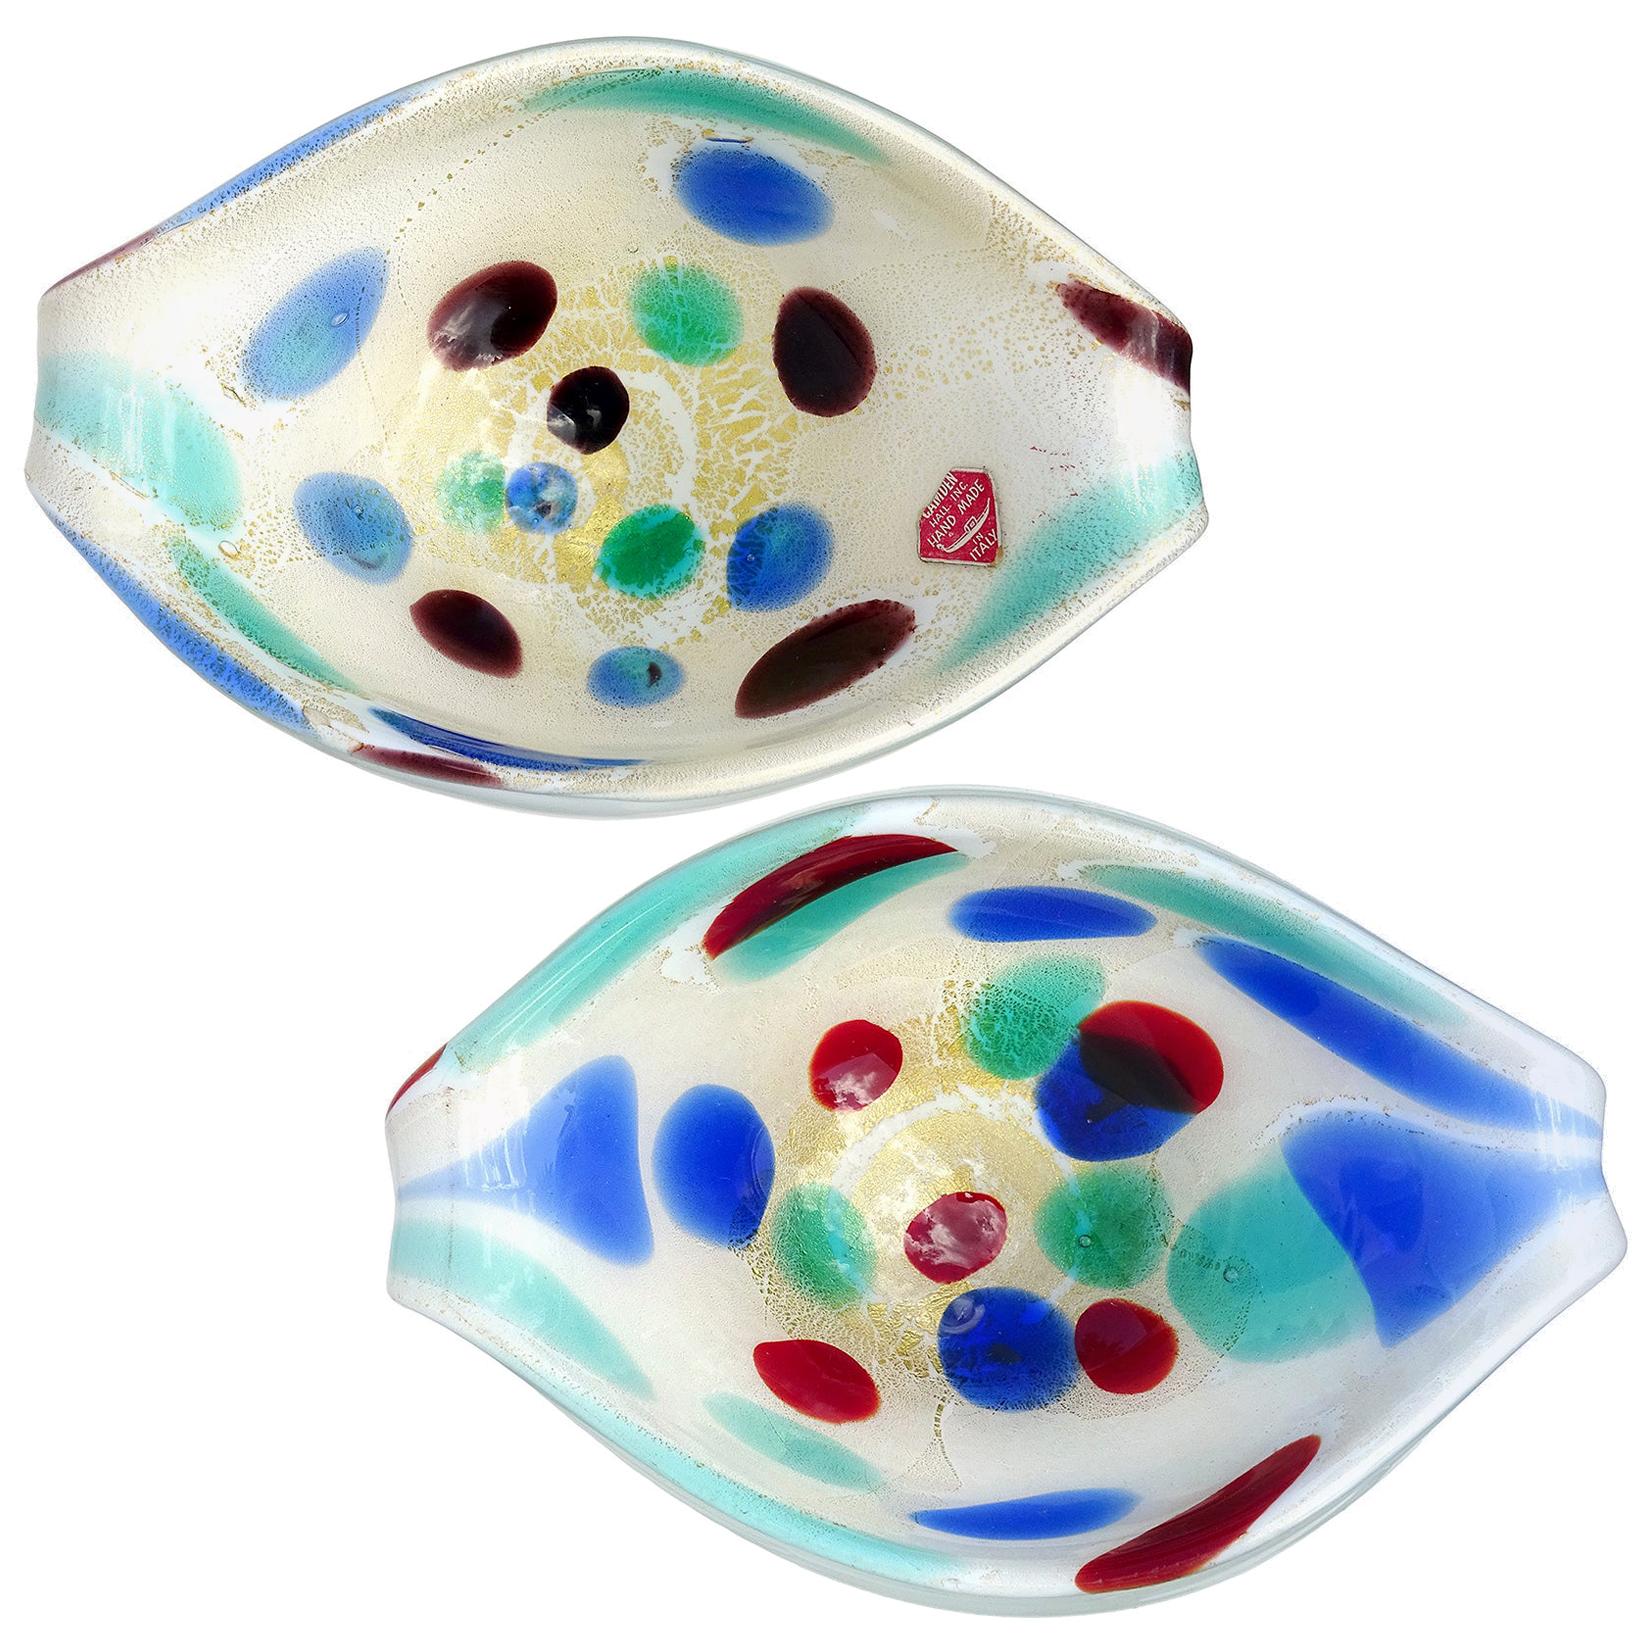 Bols en verre d'art italien de Murano:: blanc:: taches arc-en-ciel:: mouchetures d'or:: coquillages à volutes